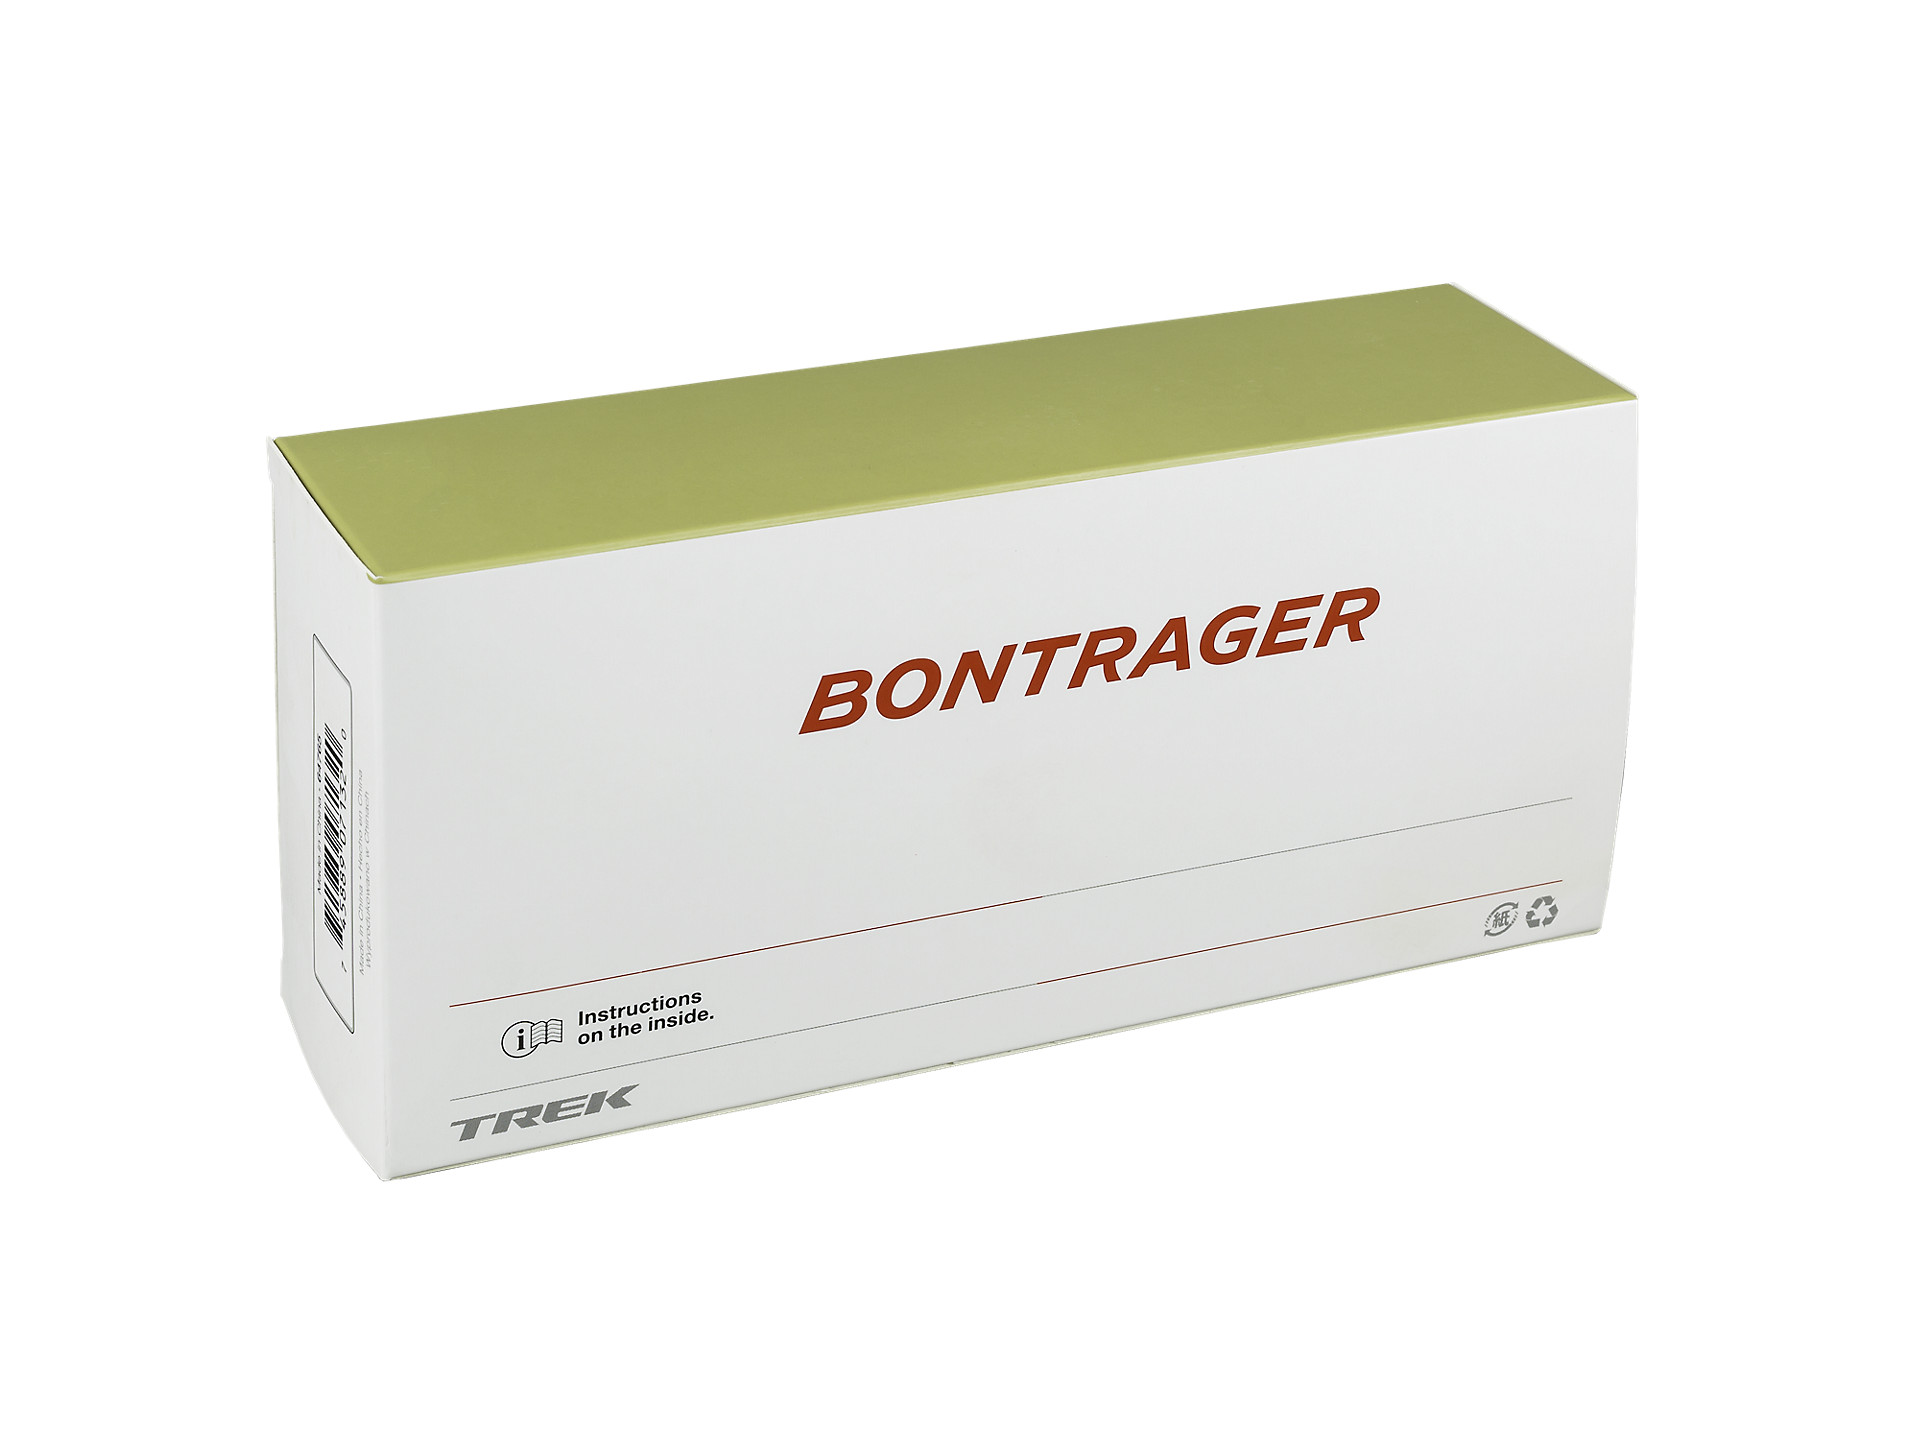 2 New Pair BONTRAGER Tubes 29 x 1.75-2.125 36mm Schrader 